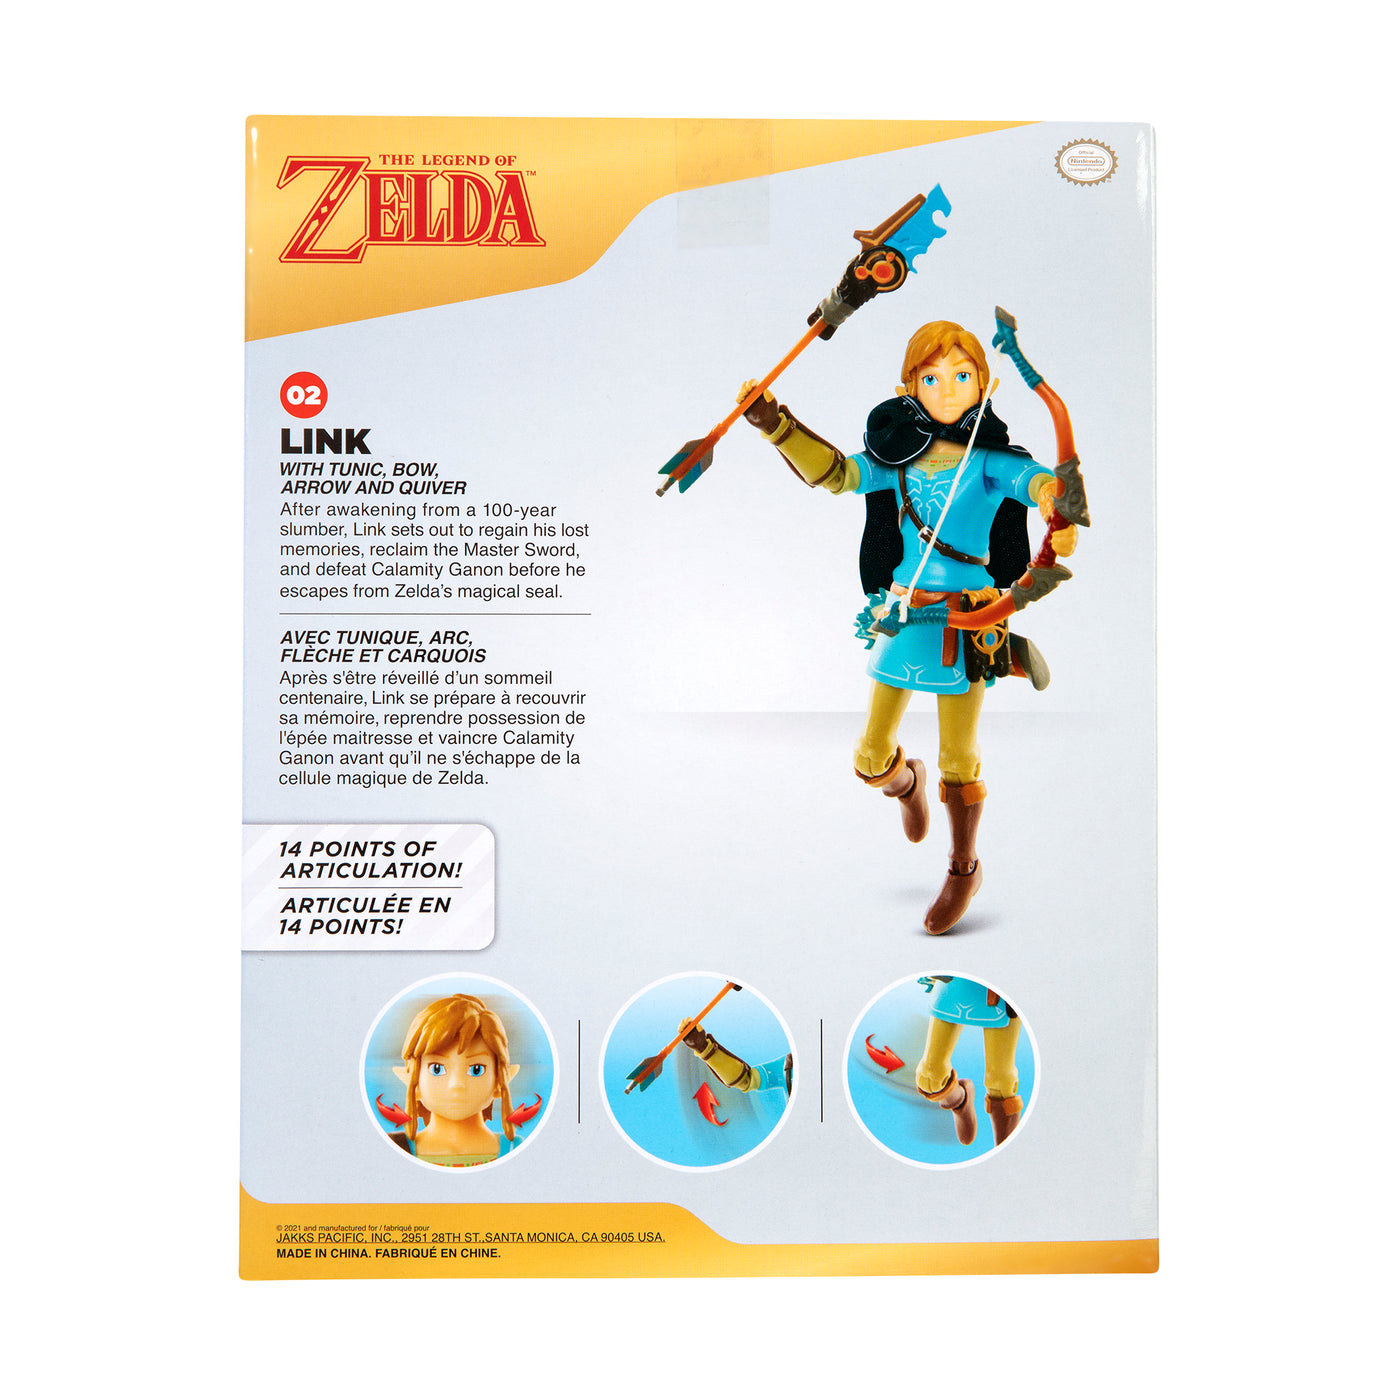 World of Nintendo Legend of Zelda Link 2.5 Mini Figure Jakks